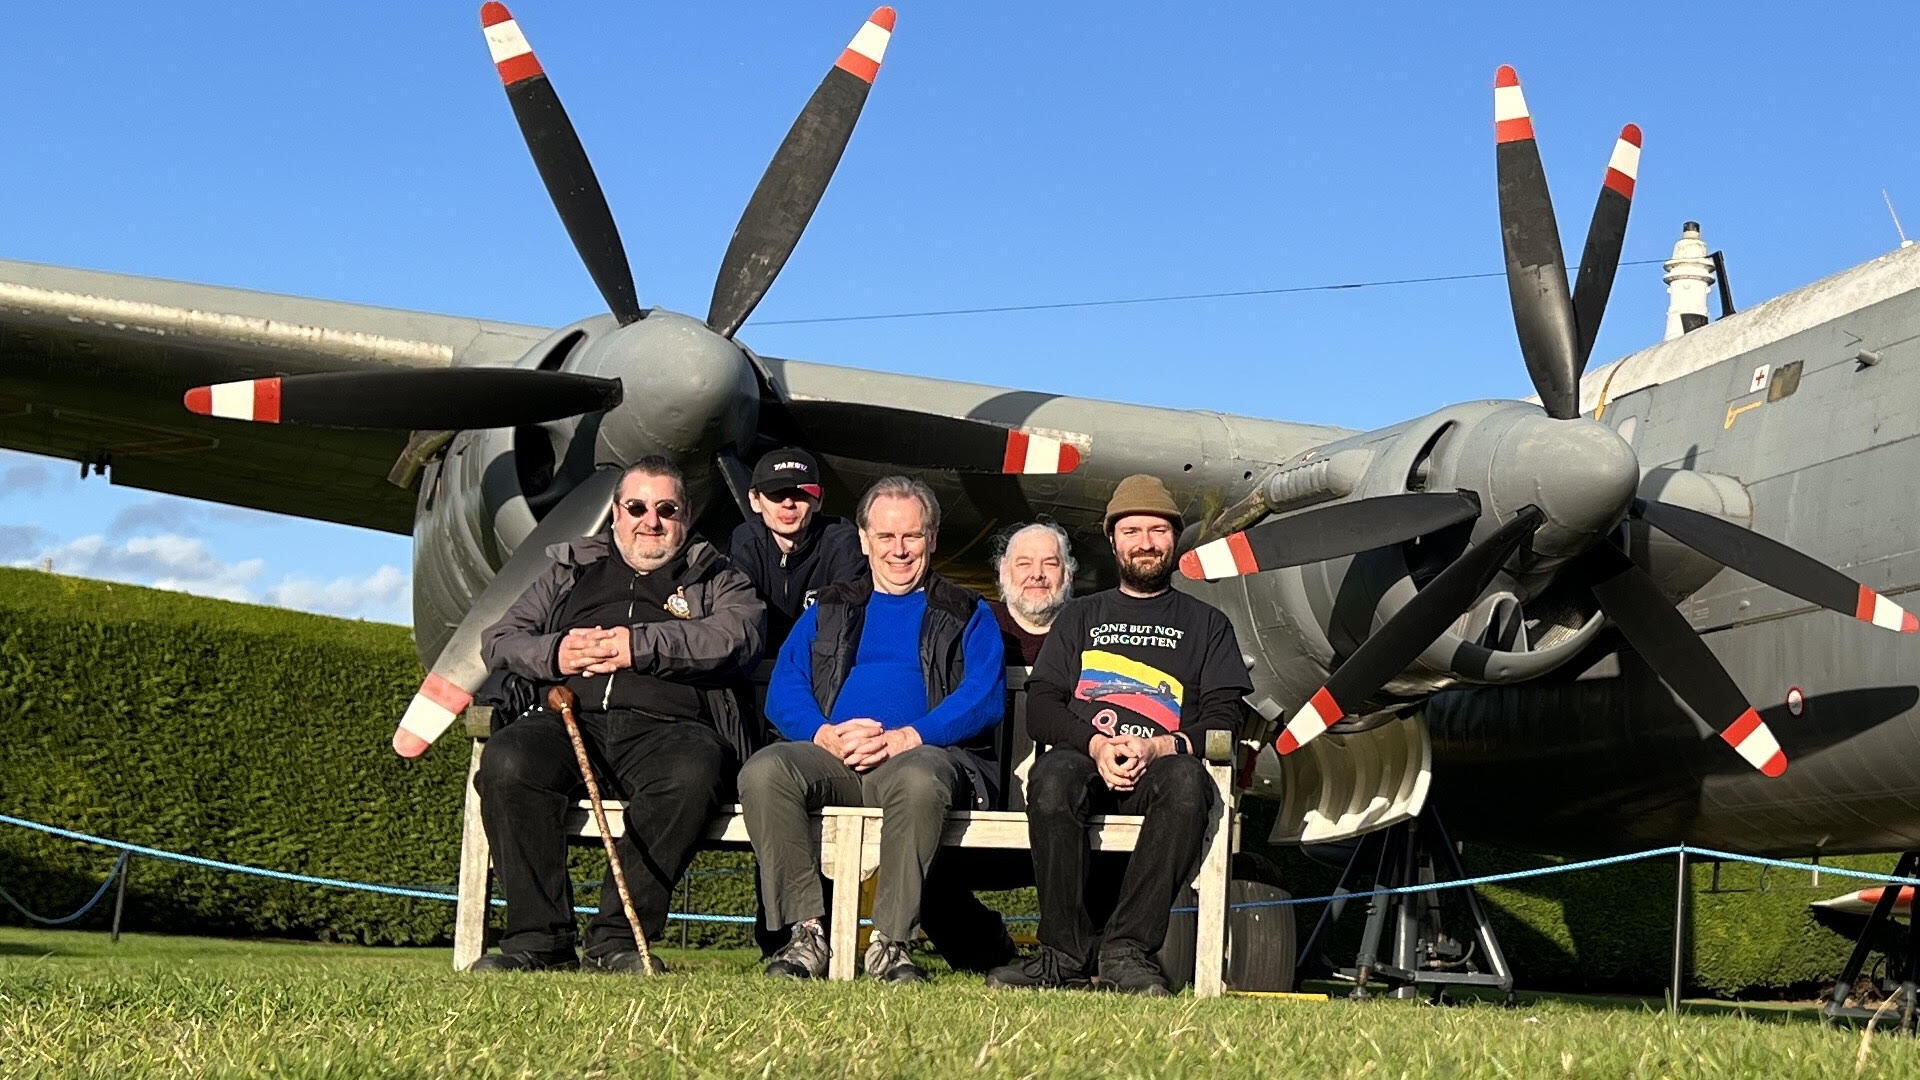 Club members in front of the Newark Air Museum Shackleton